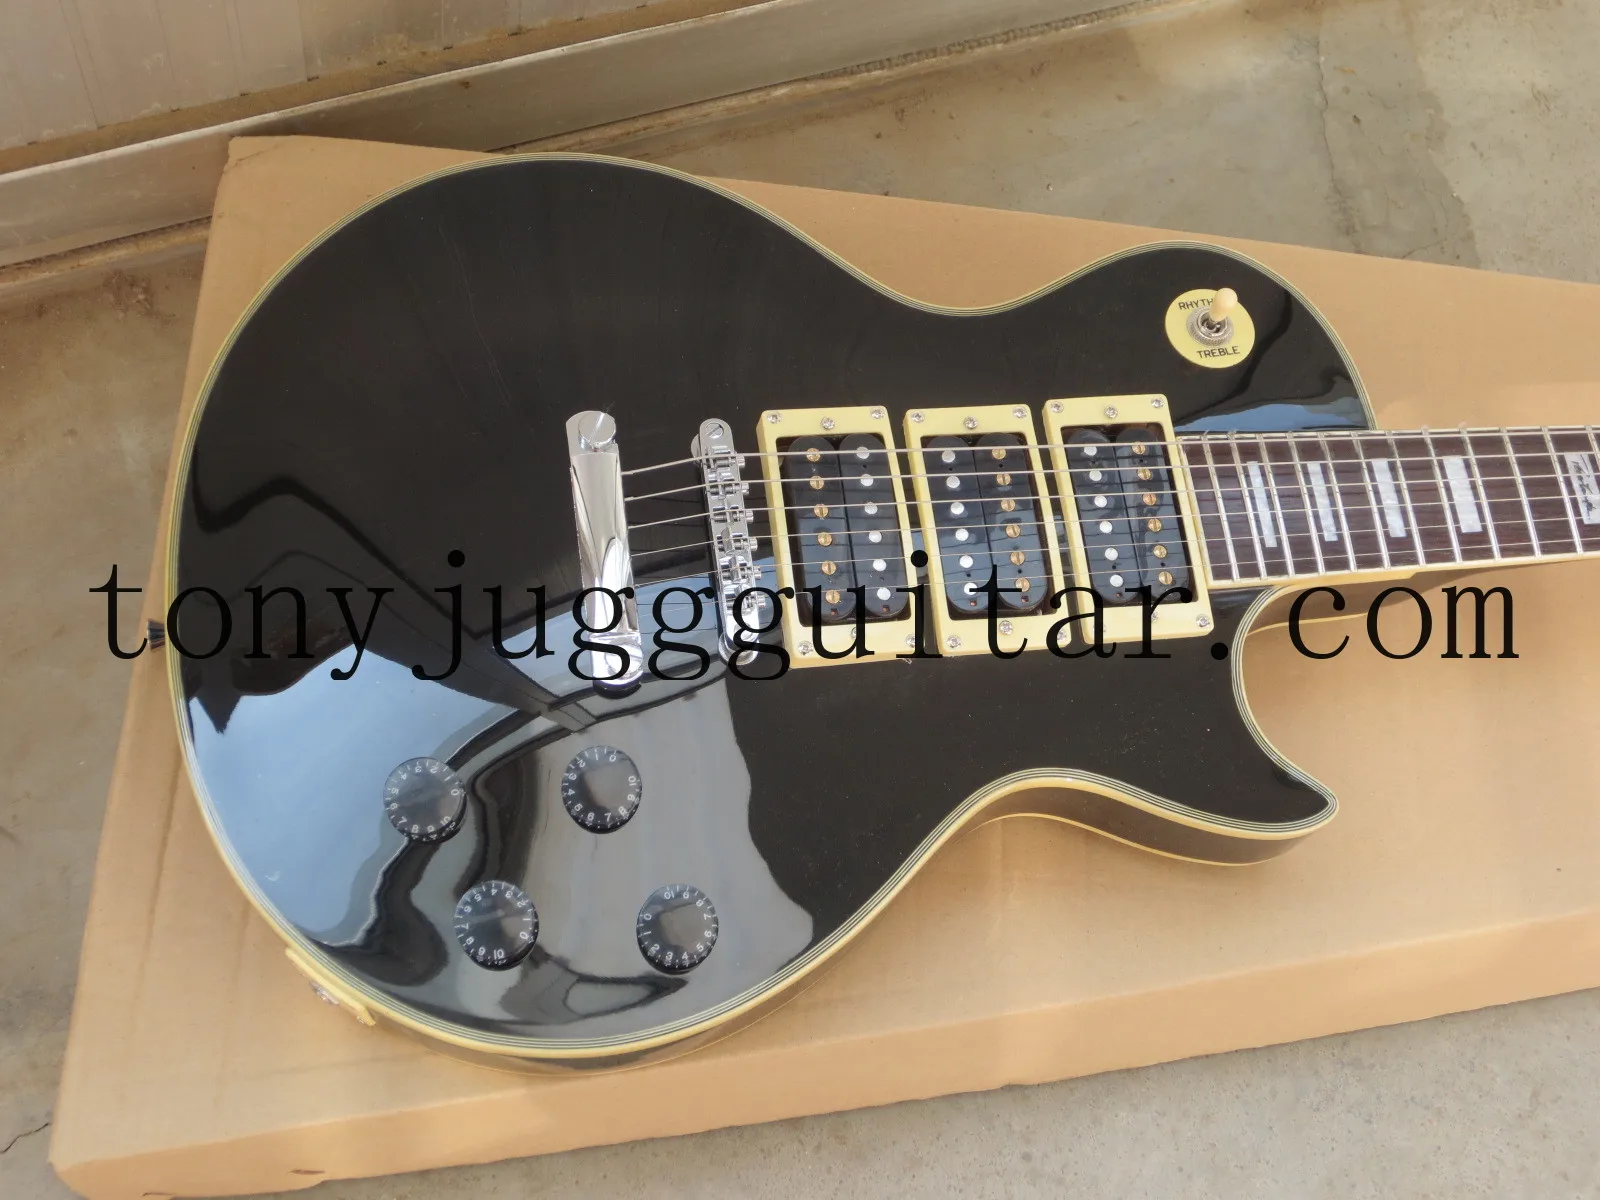 

Custom Peter Frampton Signature Black Electric Guitar 3 Pickups,Cream Pickguard, Black Speed Knobs,Grover Tuners,Chrome Hardware